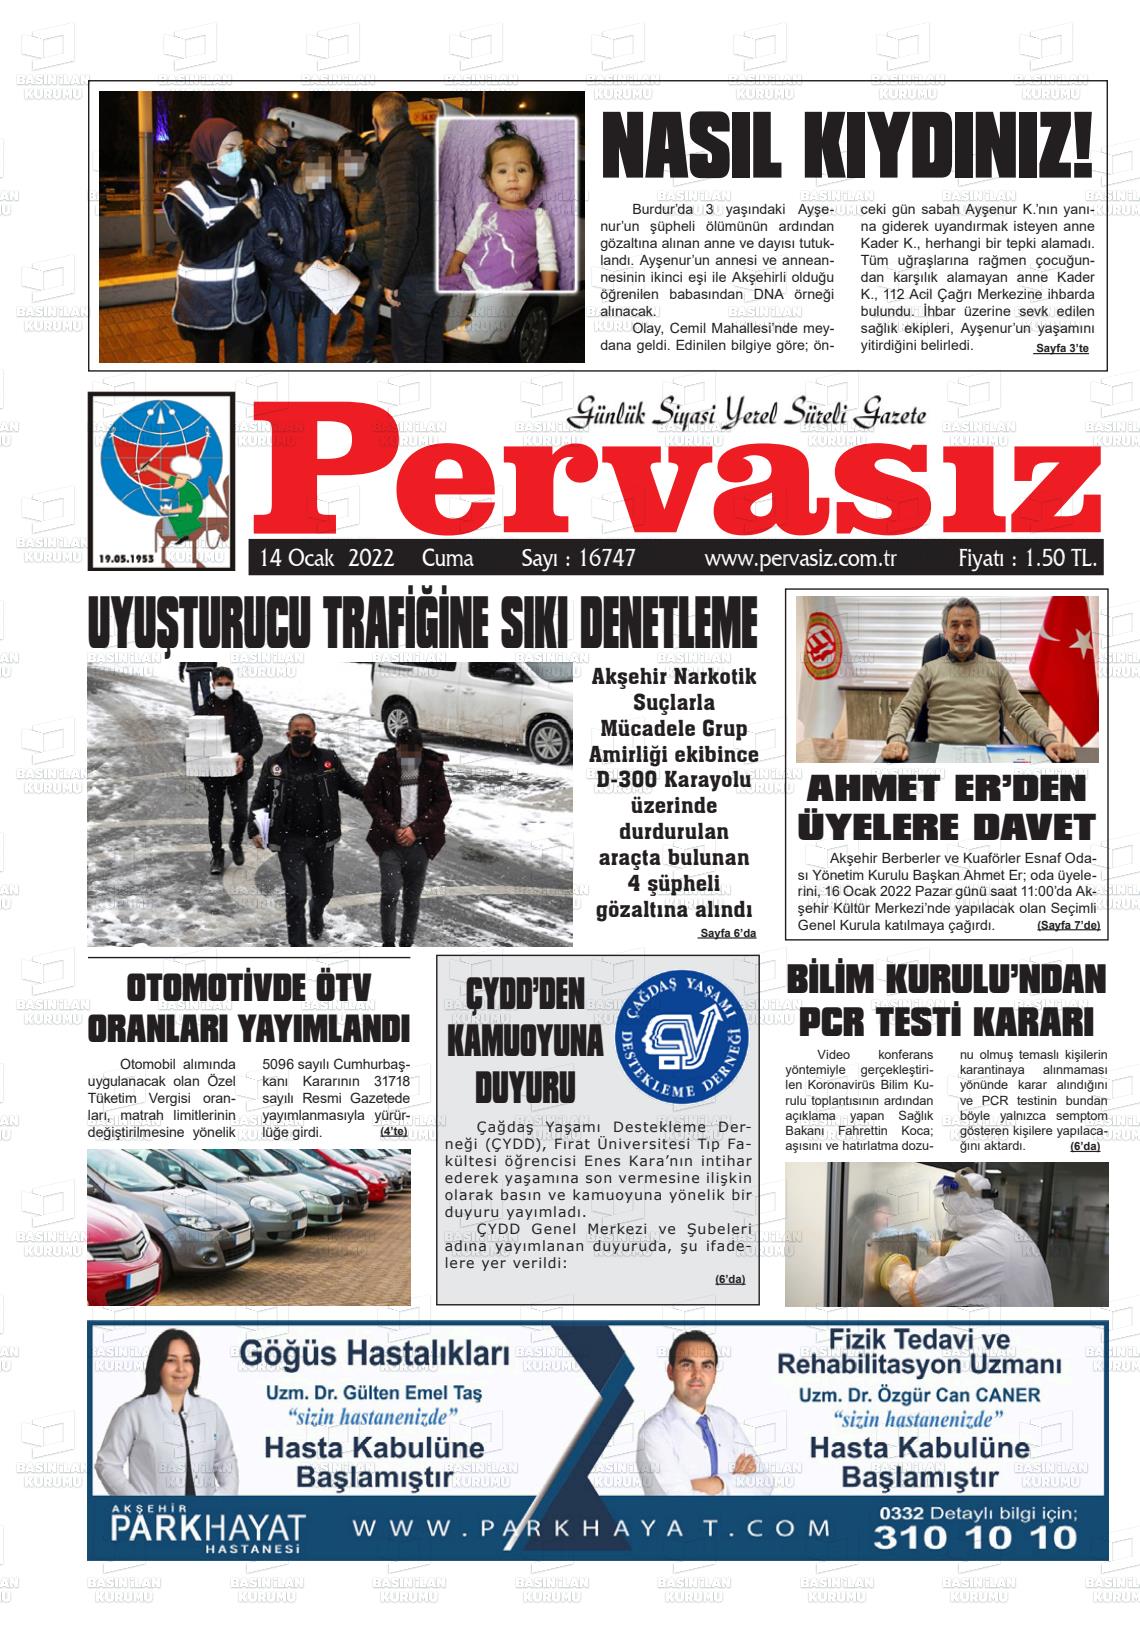 14 Ocak 2022 Konya Pervasız Gazete Manşeti